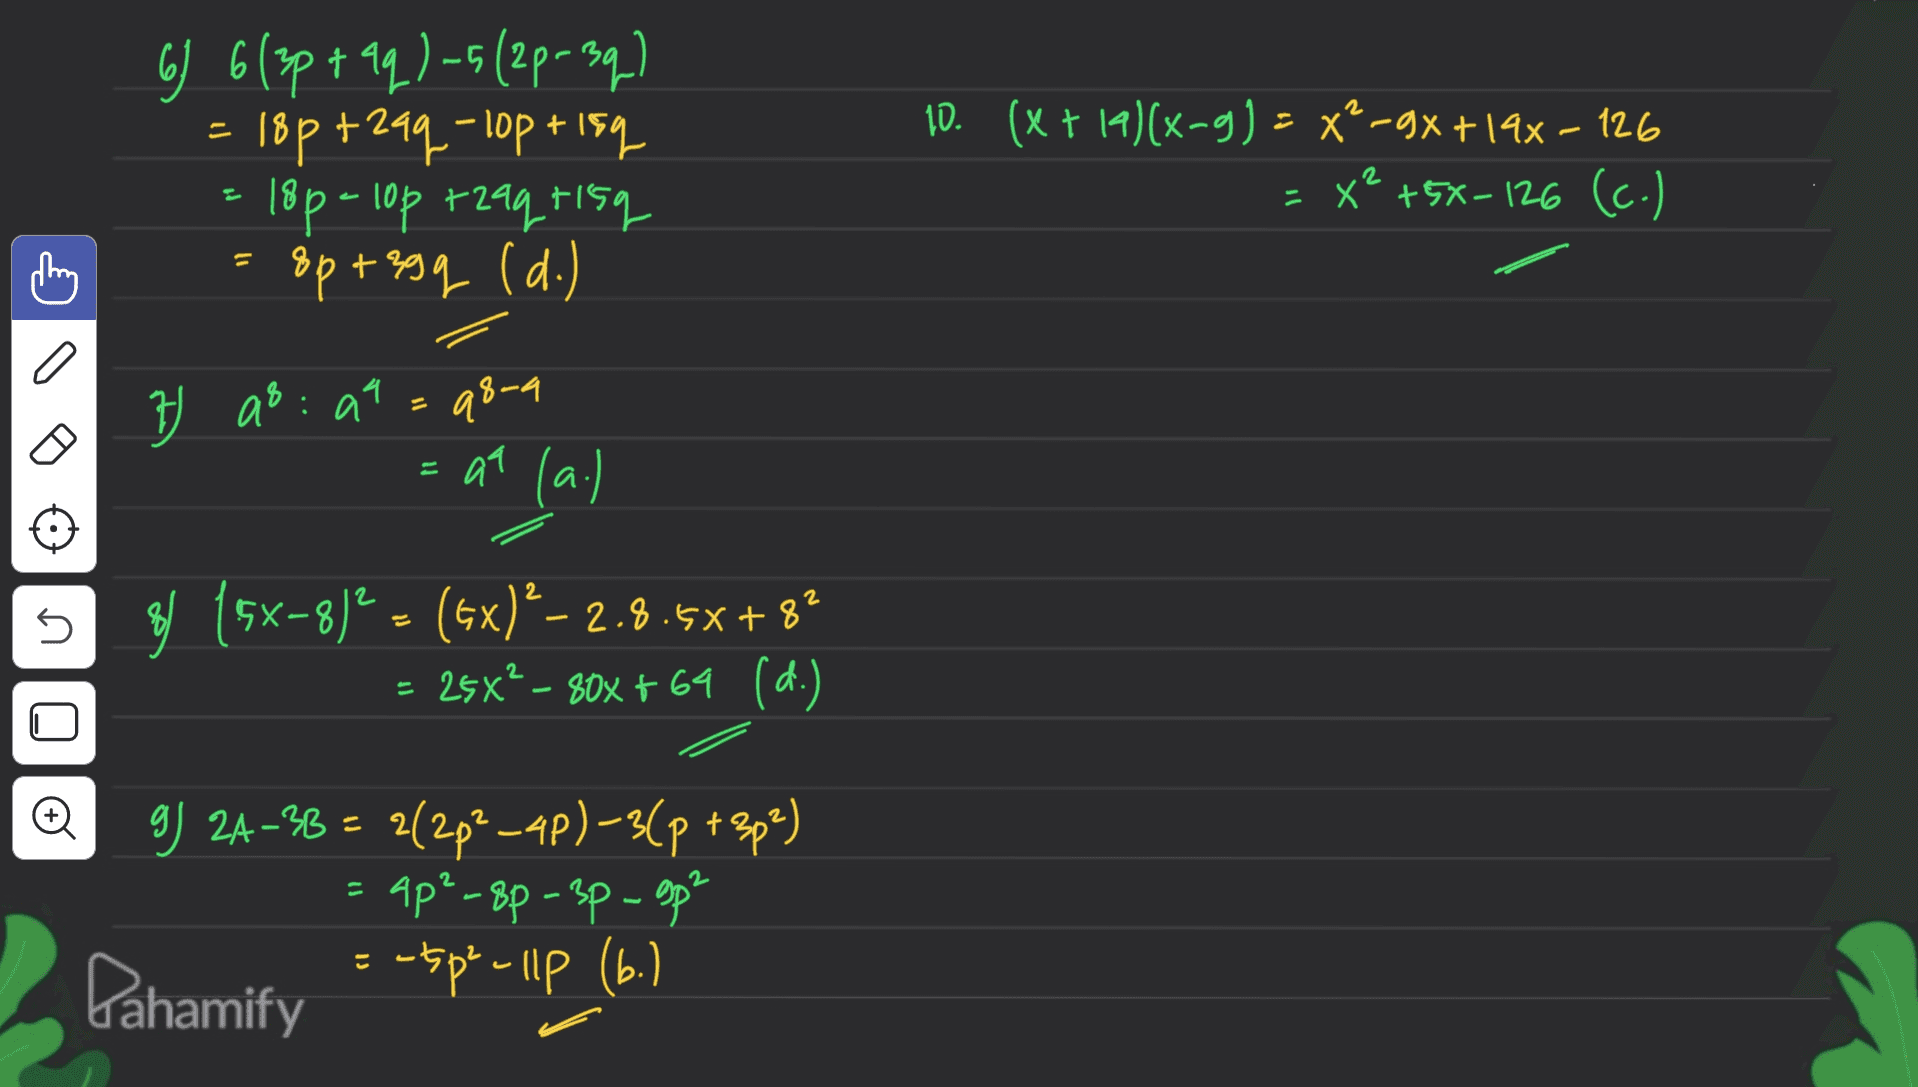 6) 6 (3p+aq)-5(2p-3q) 18p+zaq- lop+lsq 18p - 10p 72aq risq 8p+egg (d.) 10. (x + 19)(x-3) = x? -9x +19x – 126 = x² +5%-126 (c.) 2 - 19 q8-9 = at (a.) ?) as : a = ( 8 (5x-8)° = (5x) - 2.8.5x+82 - 25x² - 80% +64 (d.) 2 - n o 9) 24-3B = 2(2p²-4p)-3(p + 3p²) Ap²-8p - 3p - gp² -tope Gahamify = pe Ilp (6. ) 